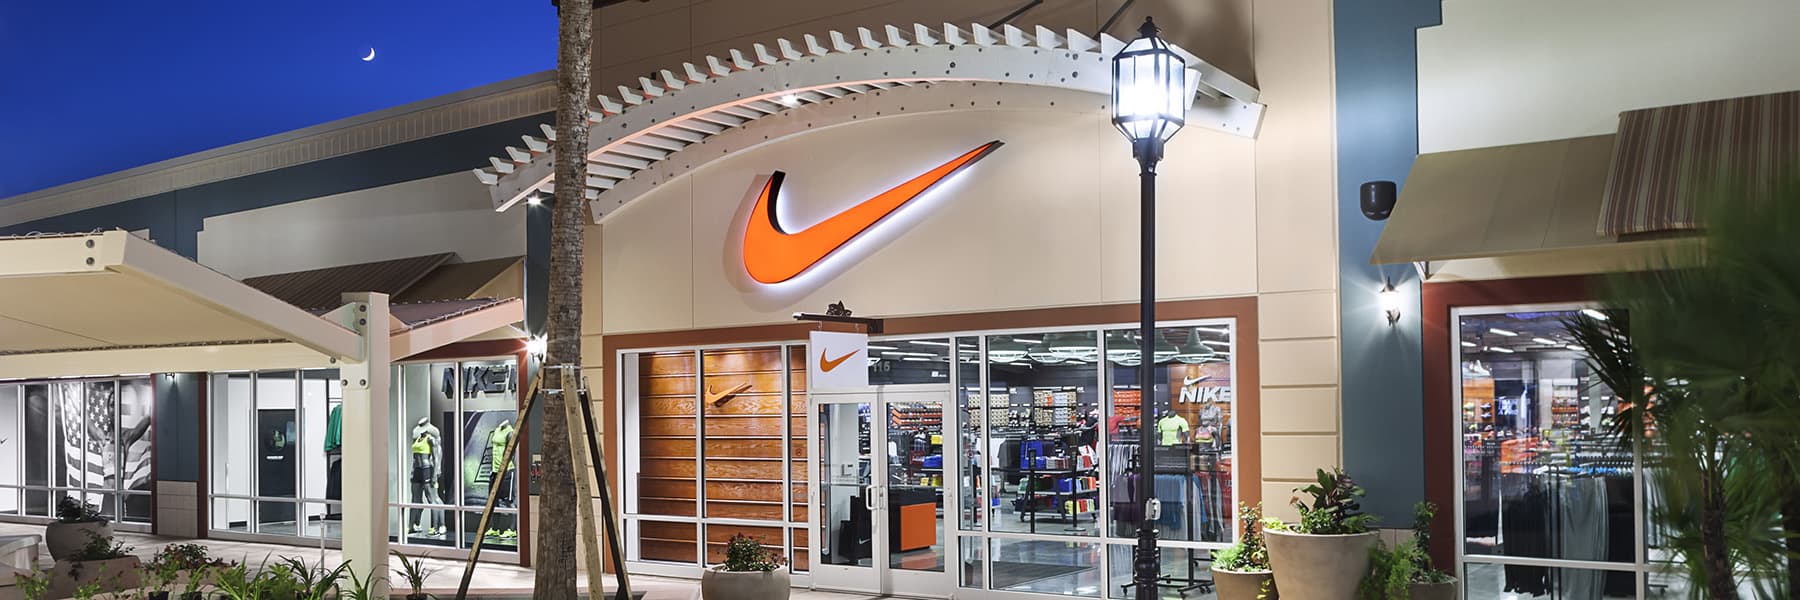 Nike Store Texas City. Texas City, TX.